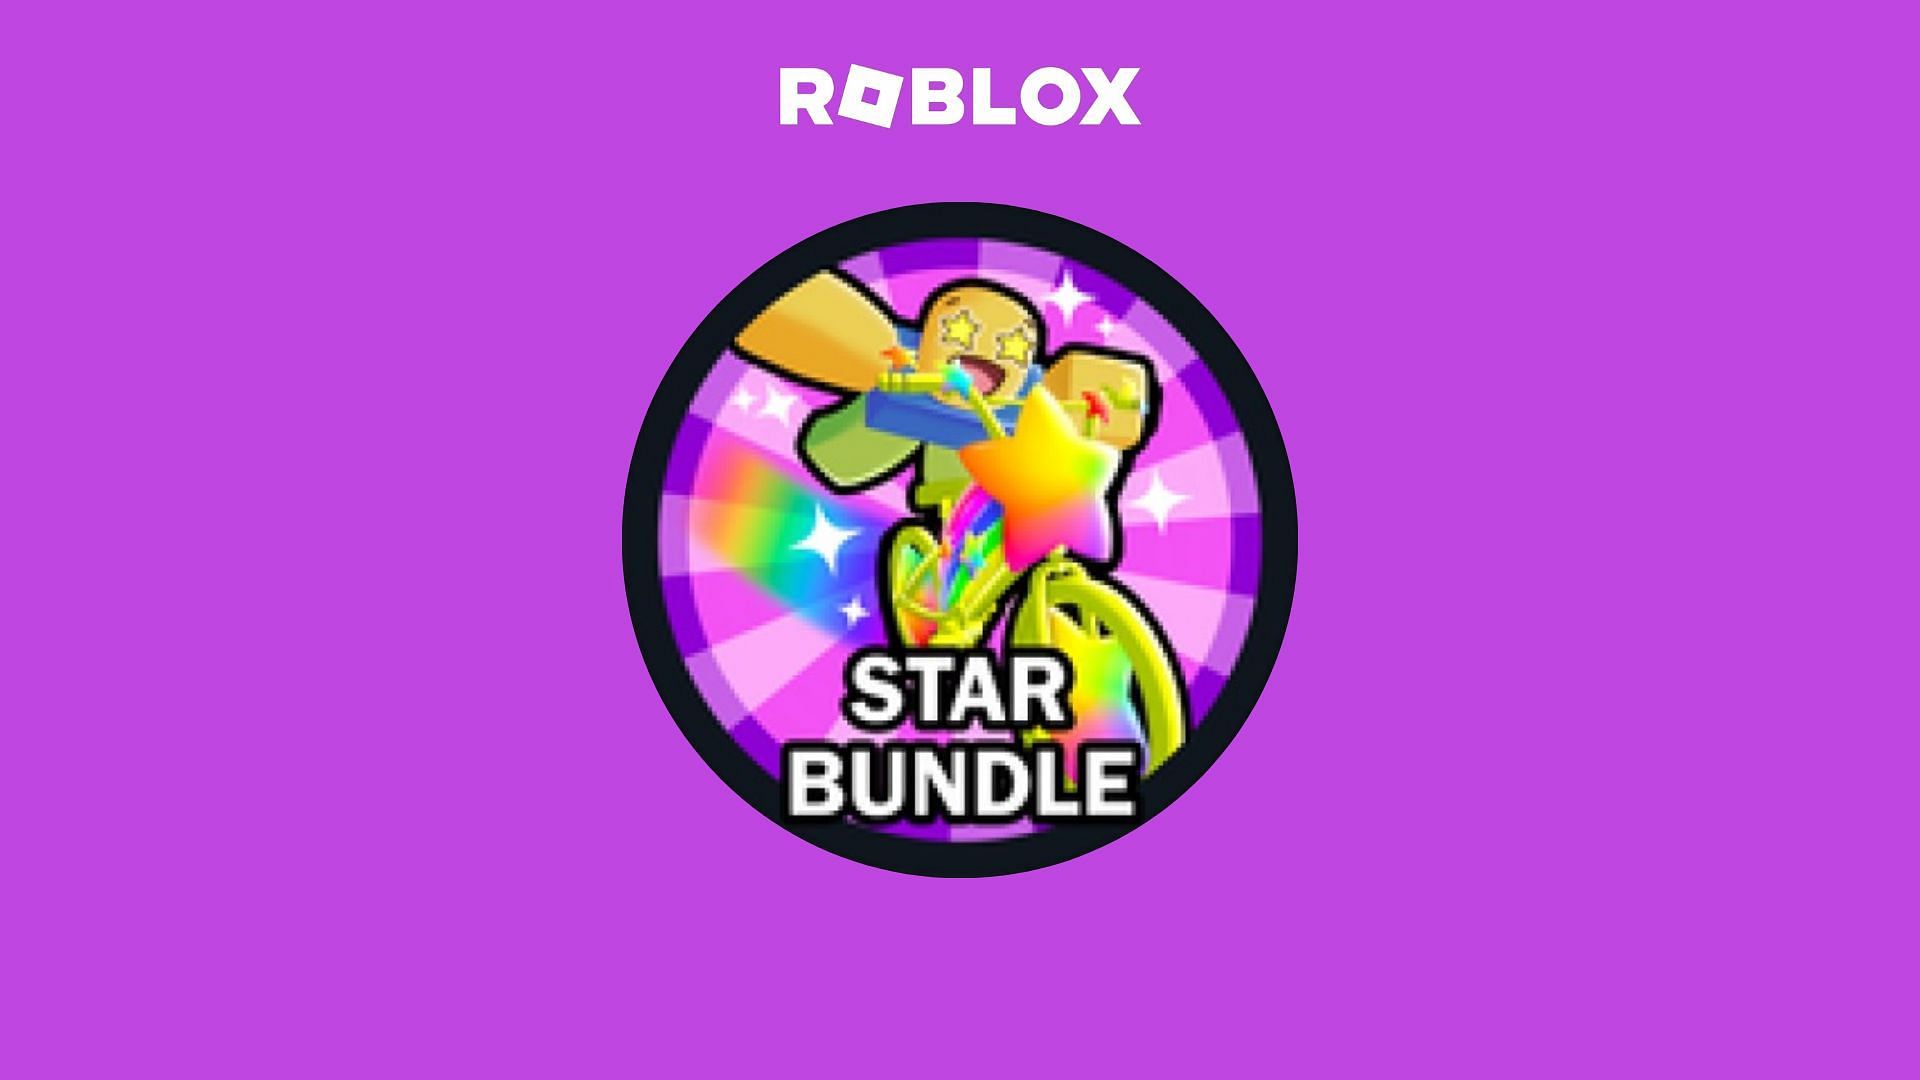 Gamepass Bundle - Roblox